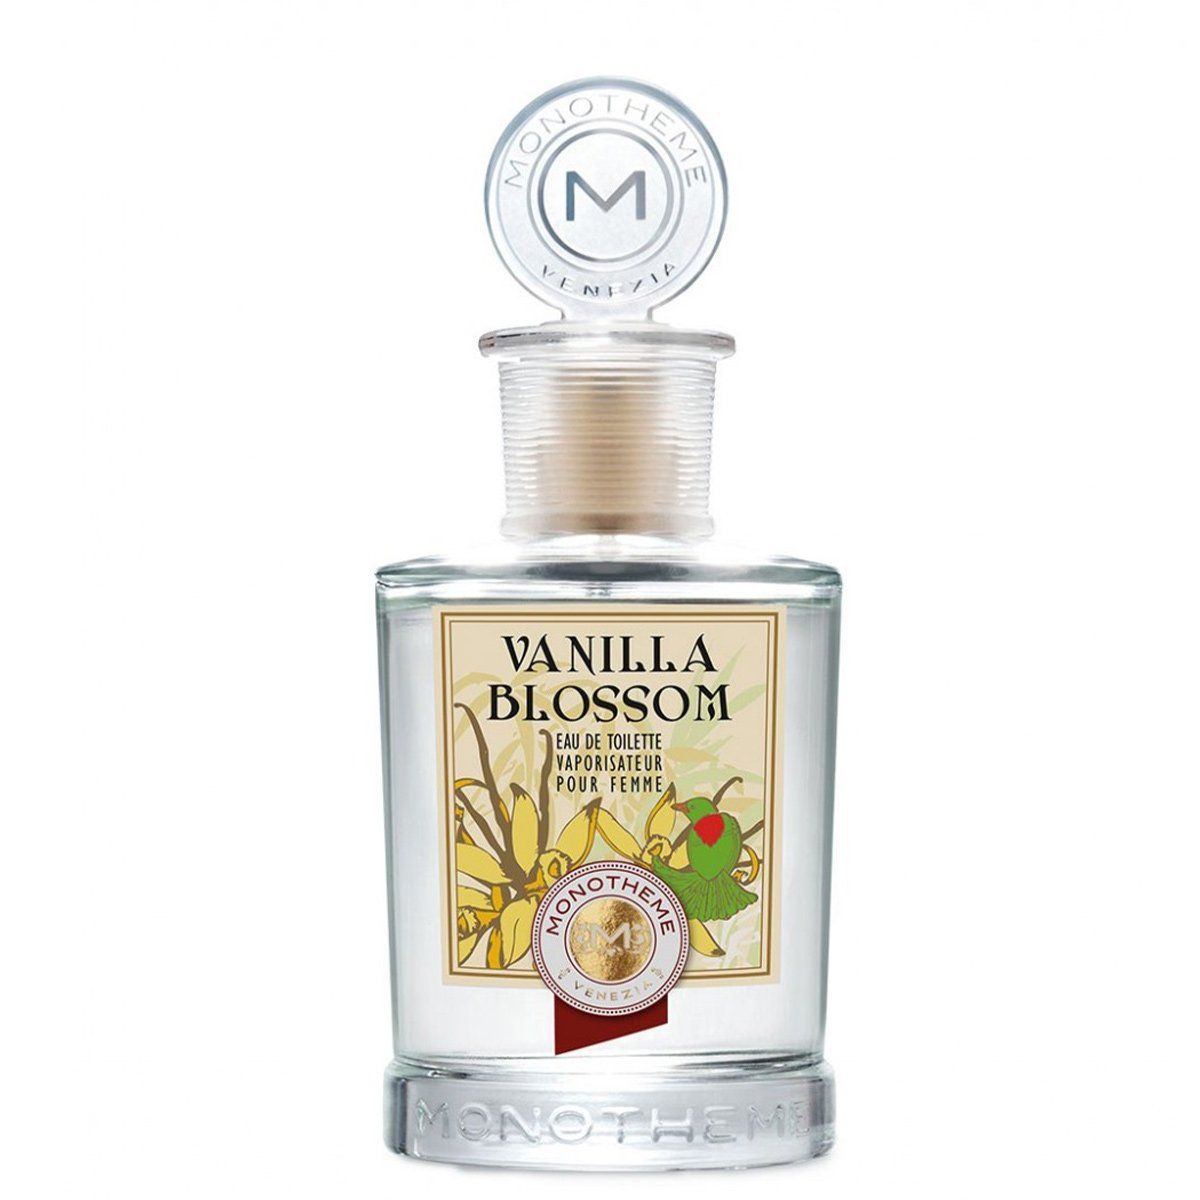  Monotheme Vanilla Blossom 